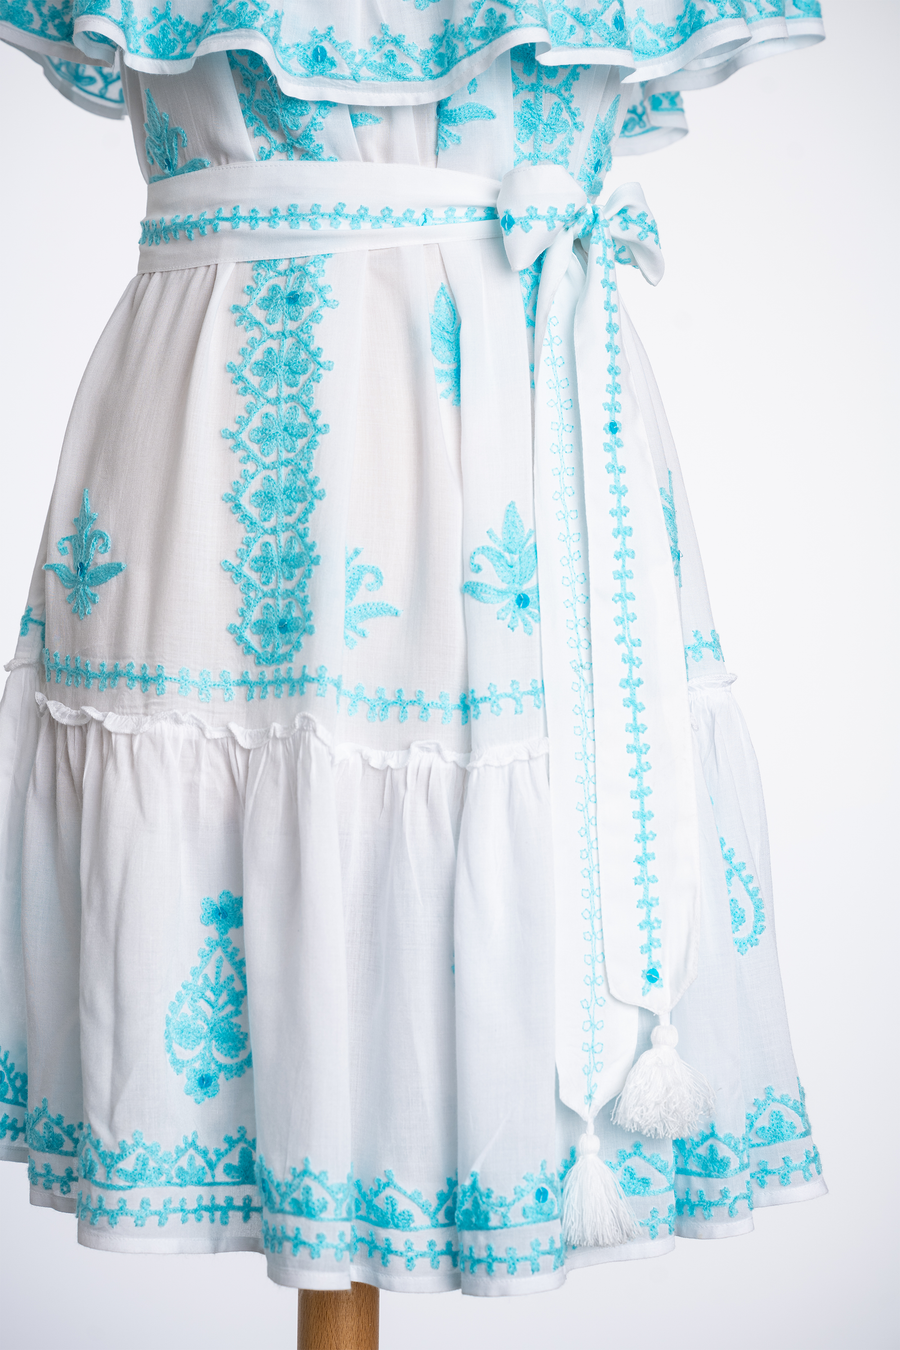 Dress "Fiorina" - Tunibelle